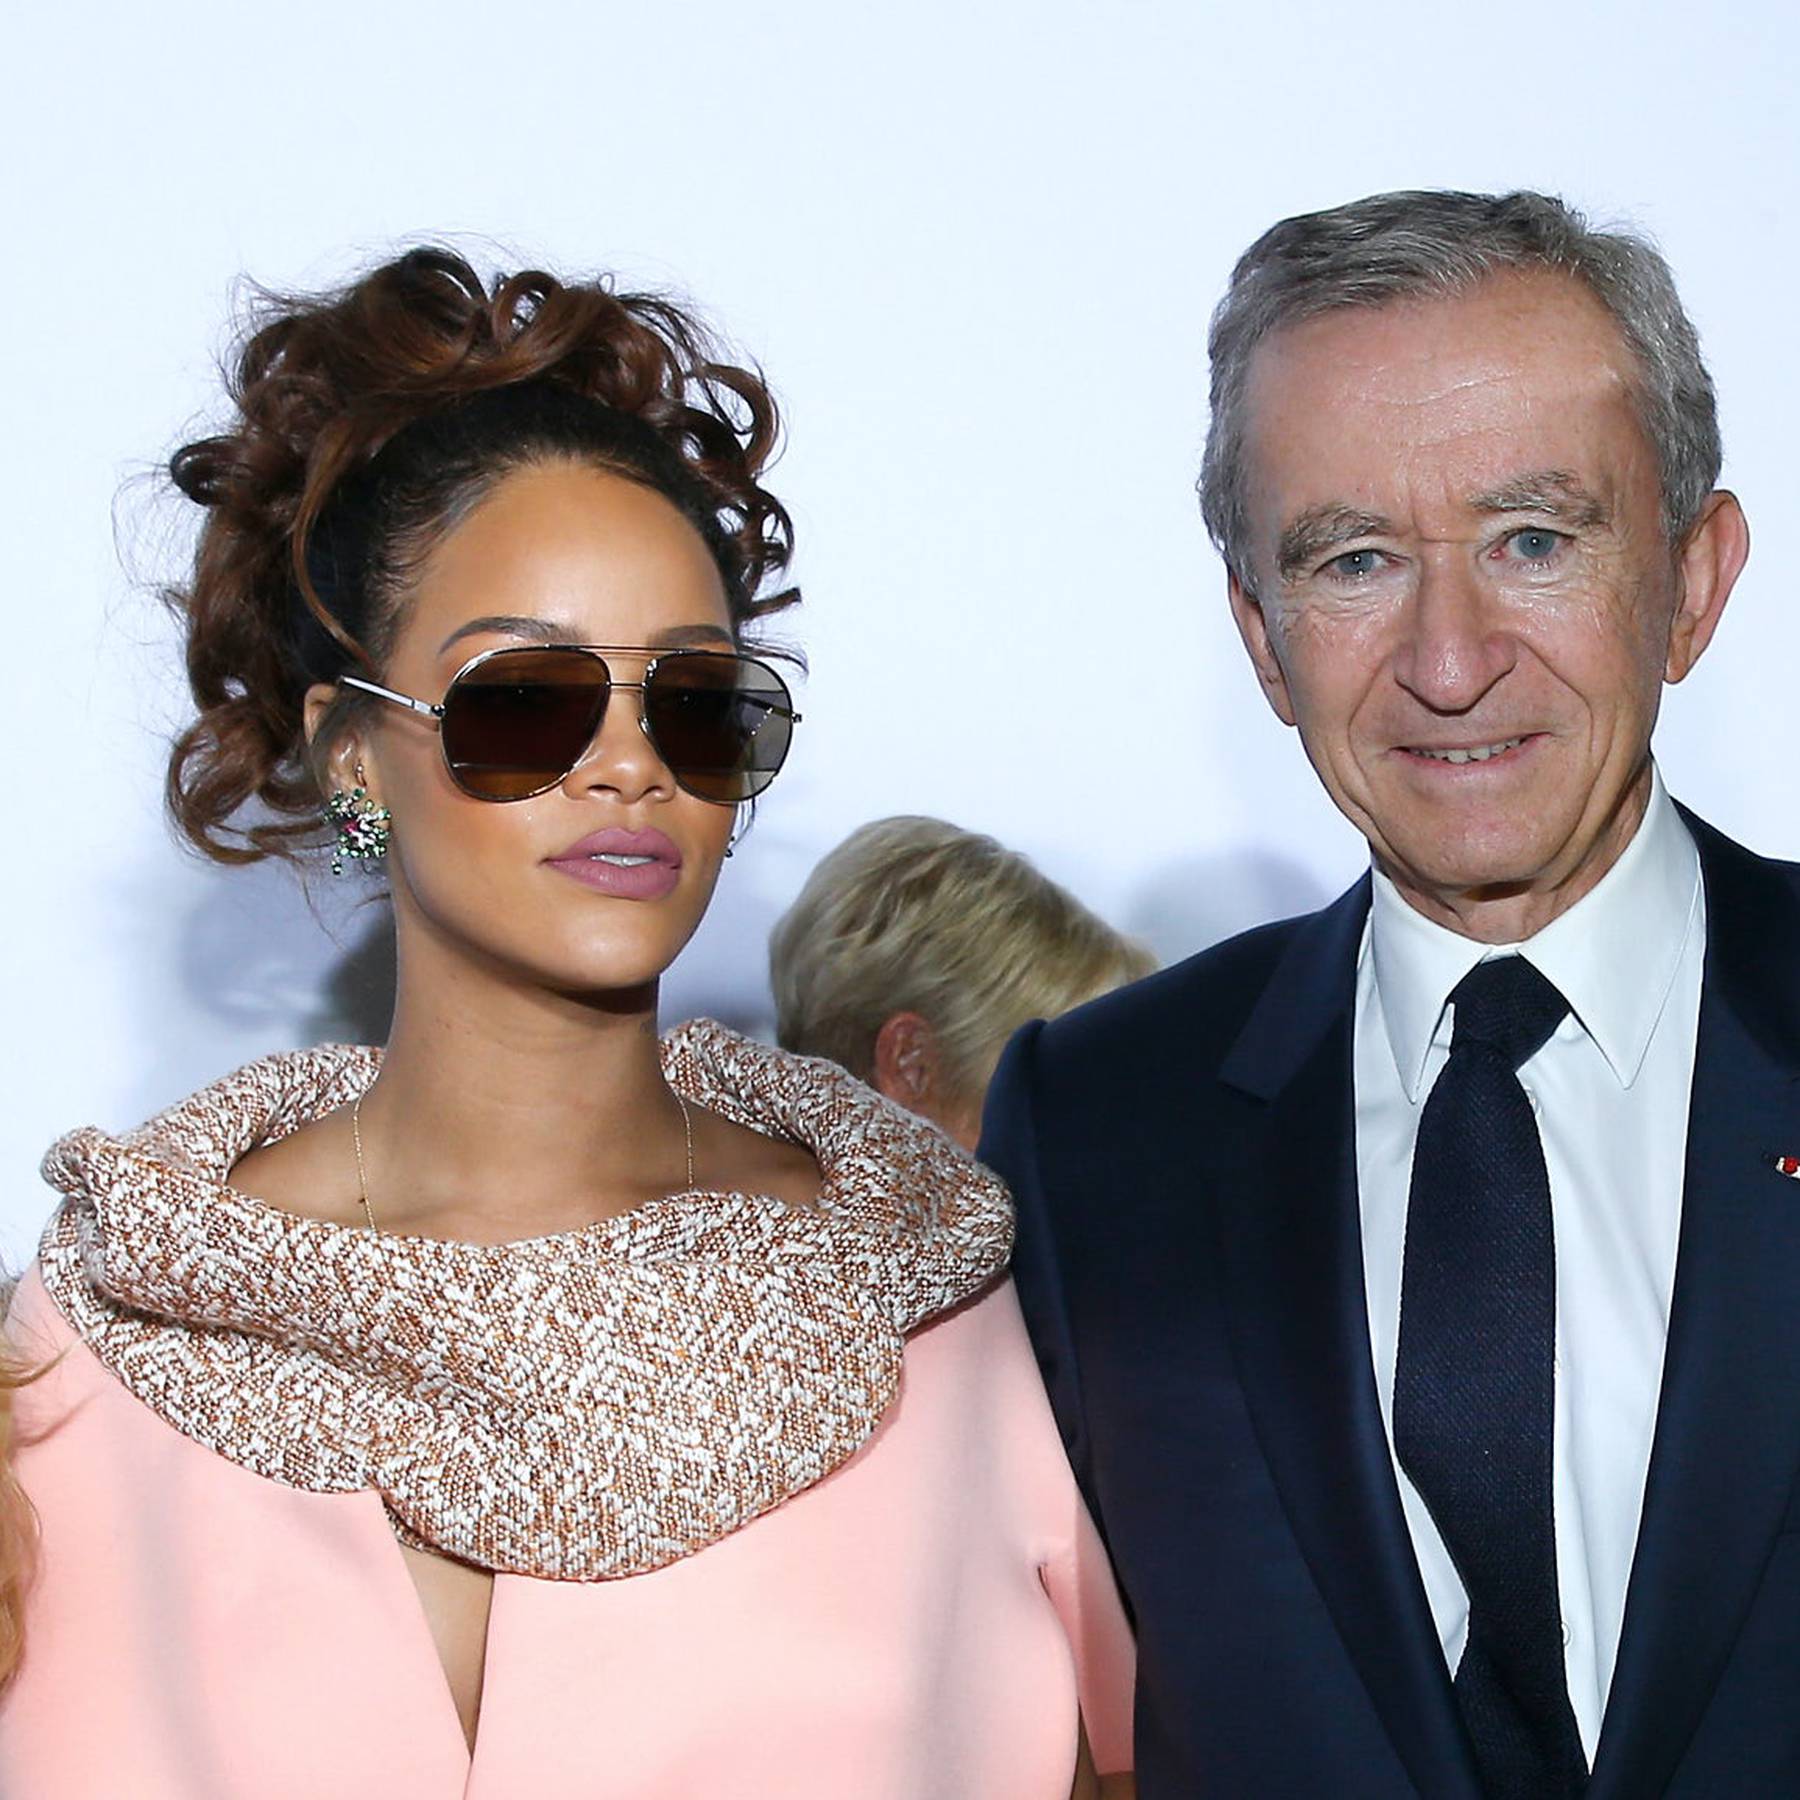 Rihanna Launches Her Fenty Fashion Brand With Paris Store – WindowsWear